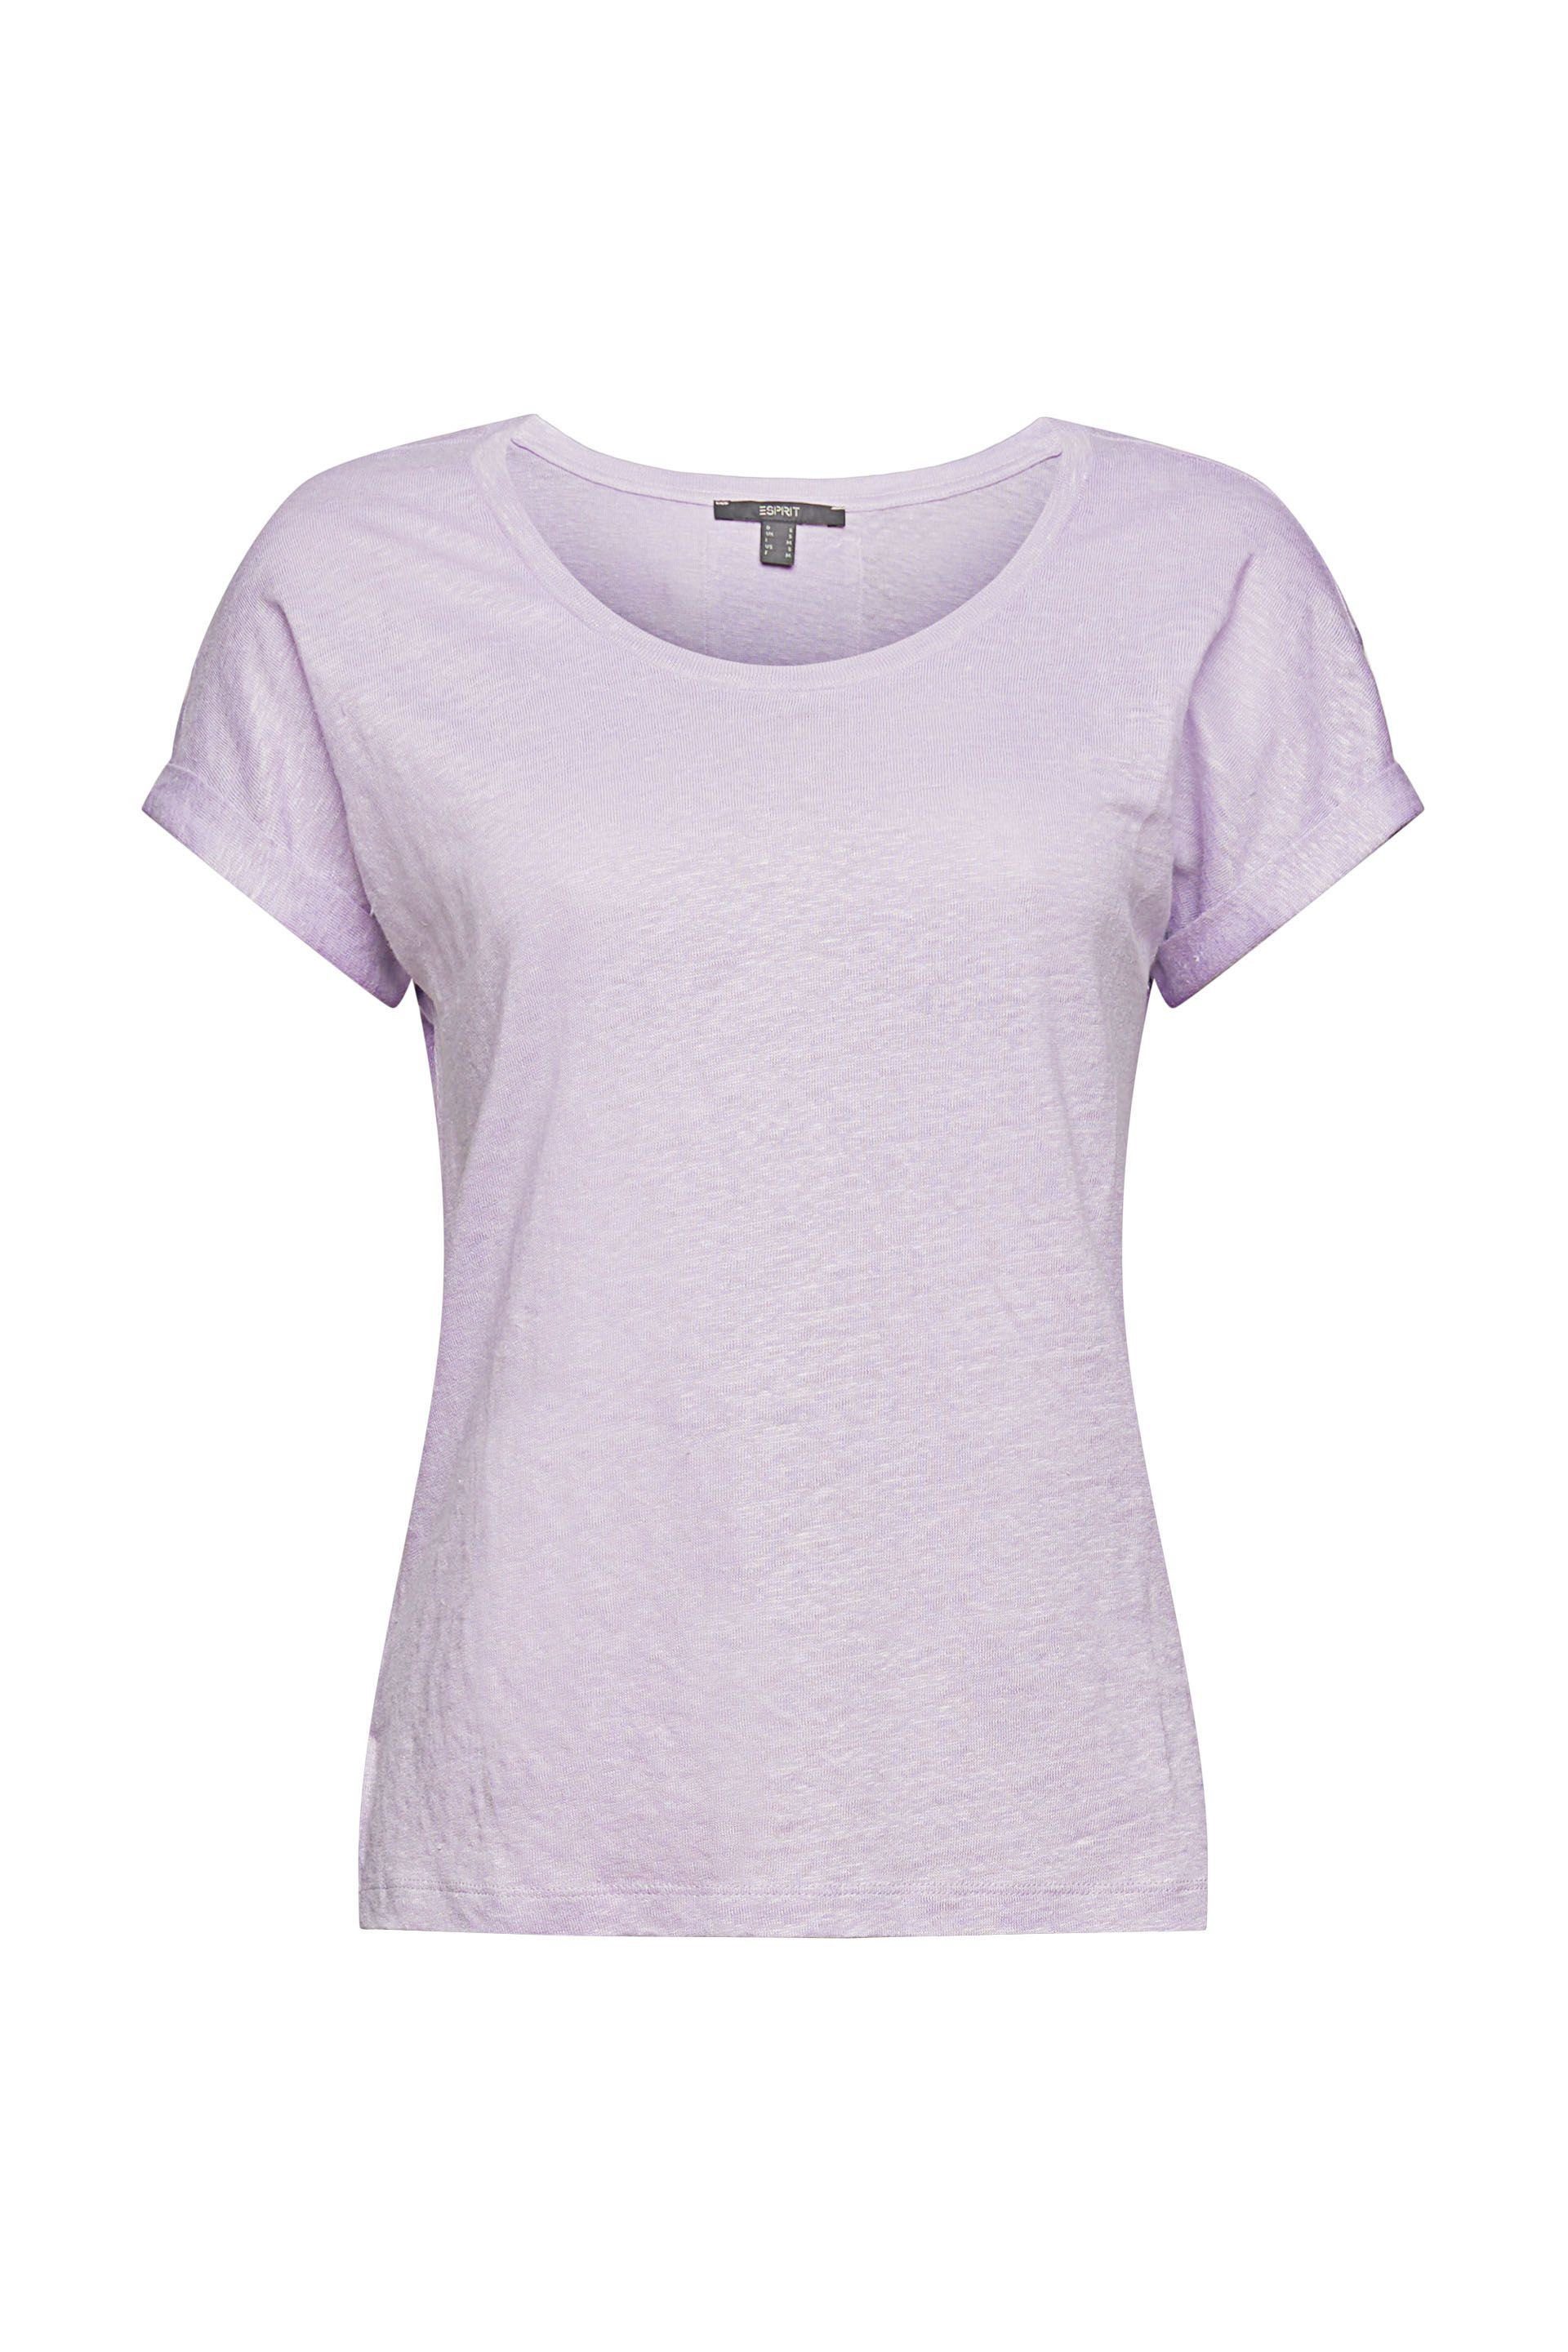 Esprit T-Shirt T-Shirt aus 100% Leinen lavender